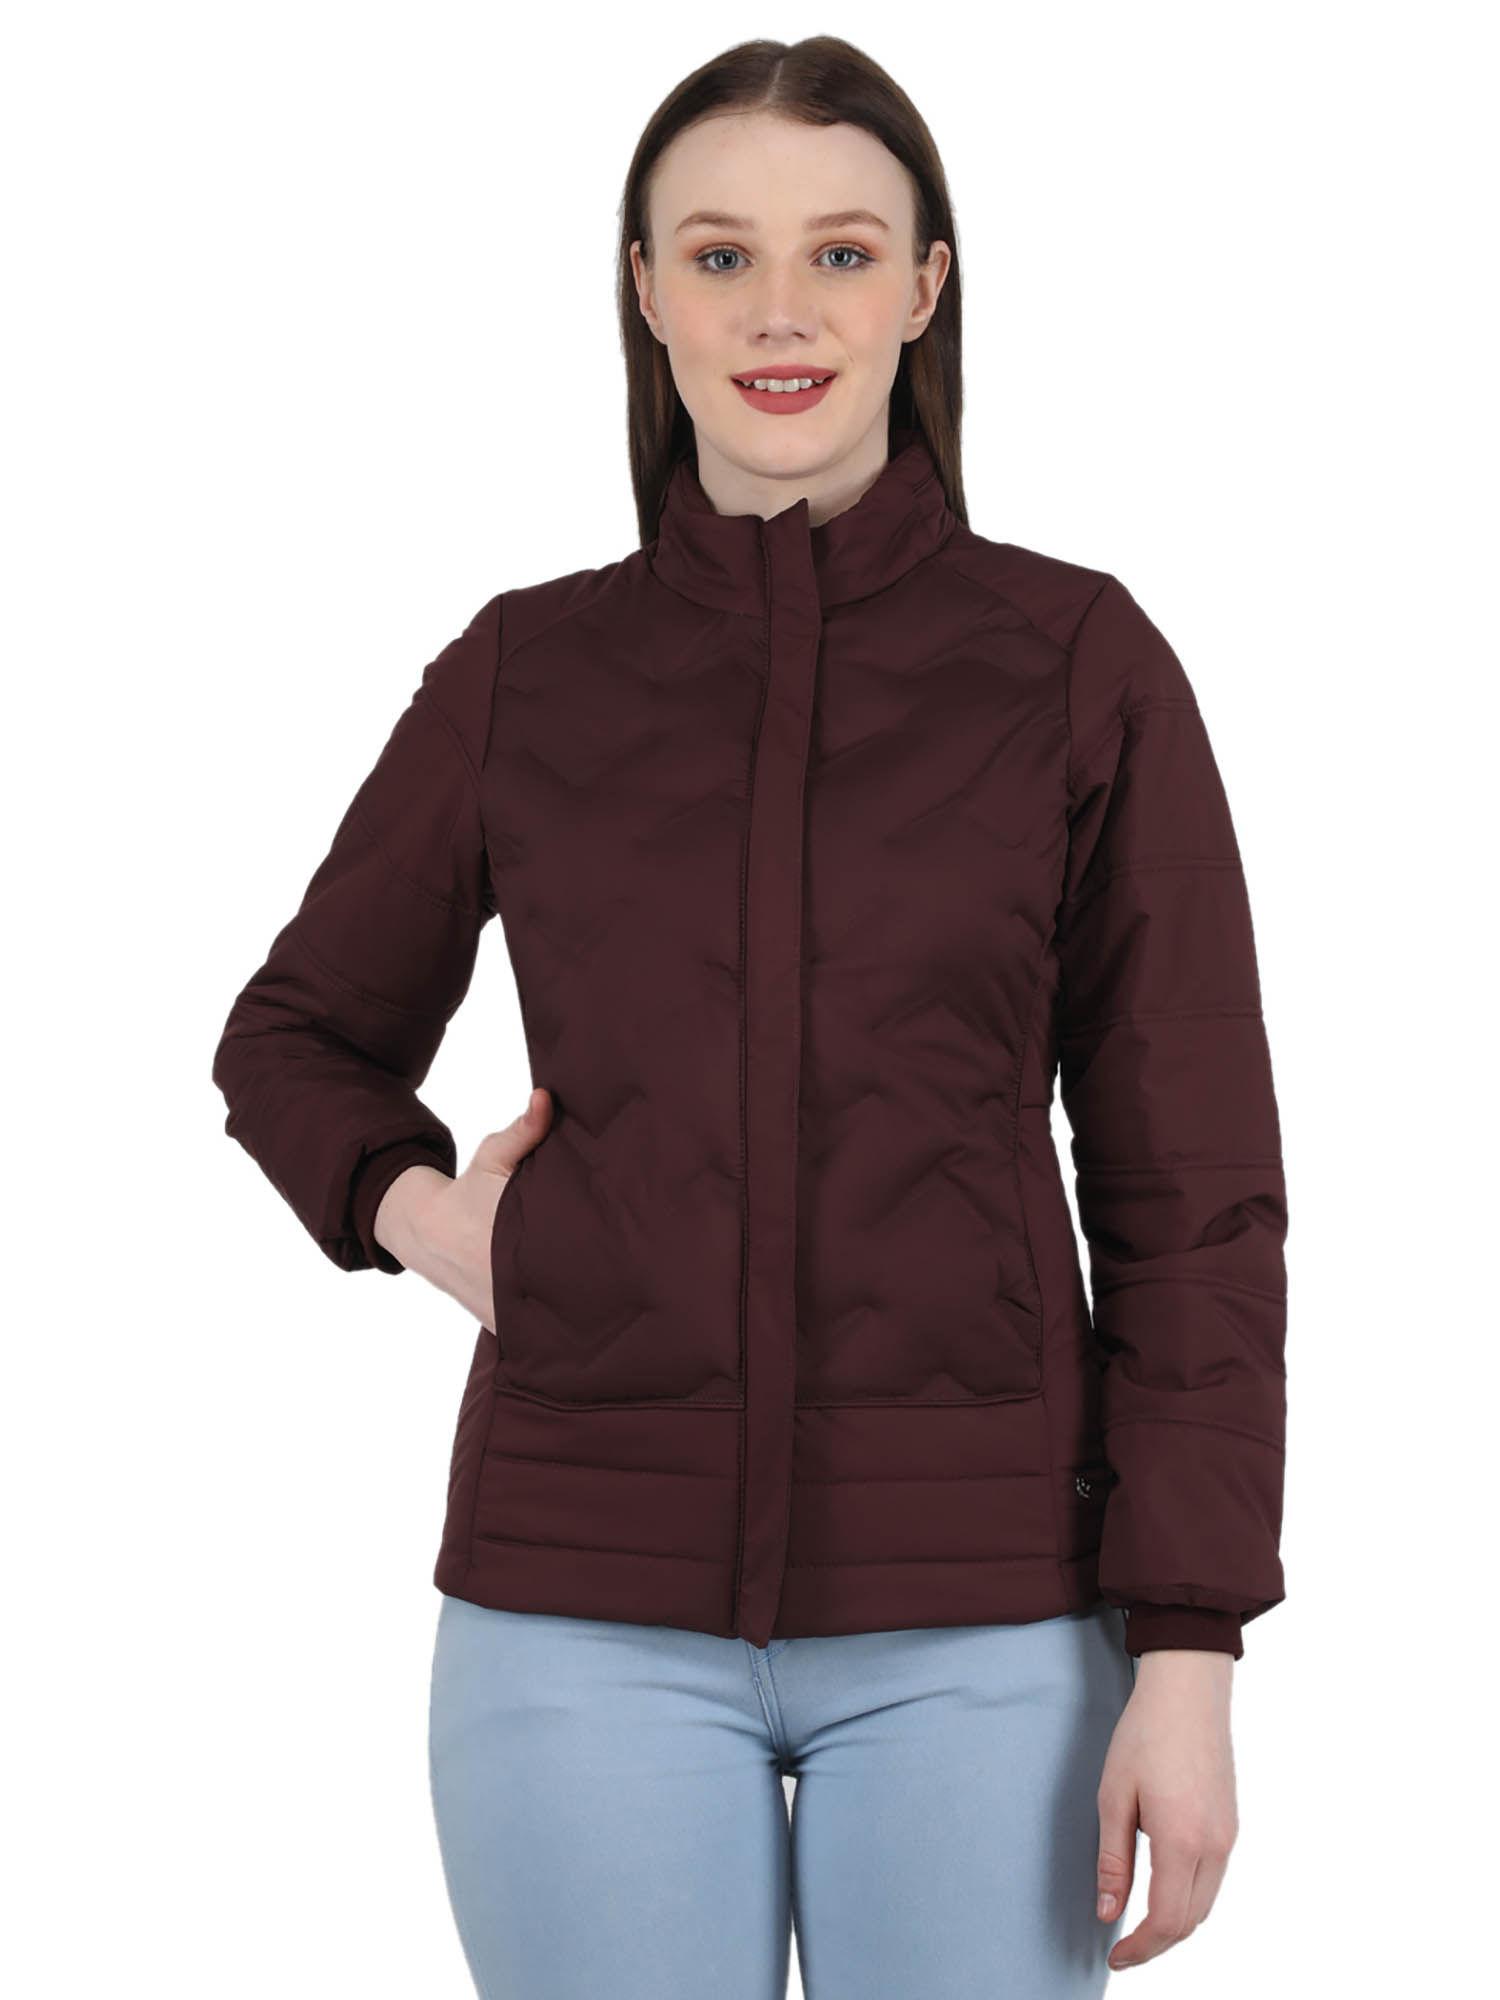 maroon-solid-jackets-and-coats